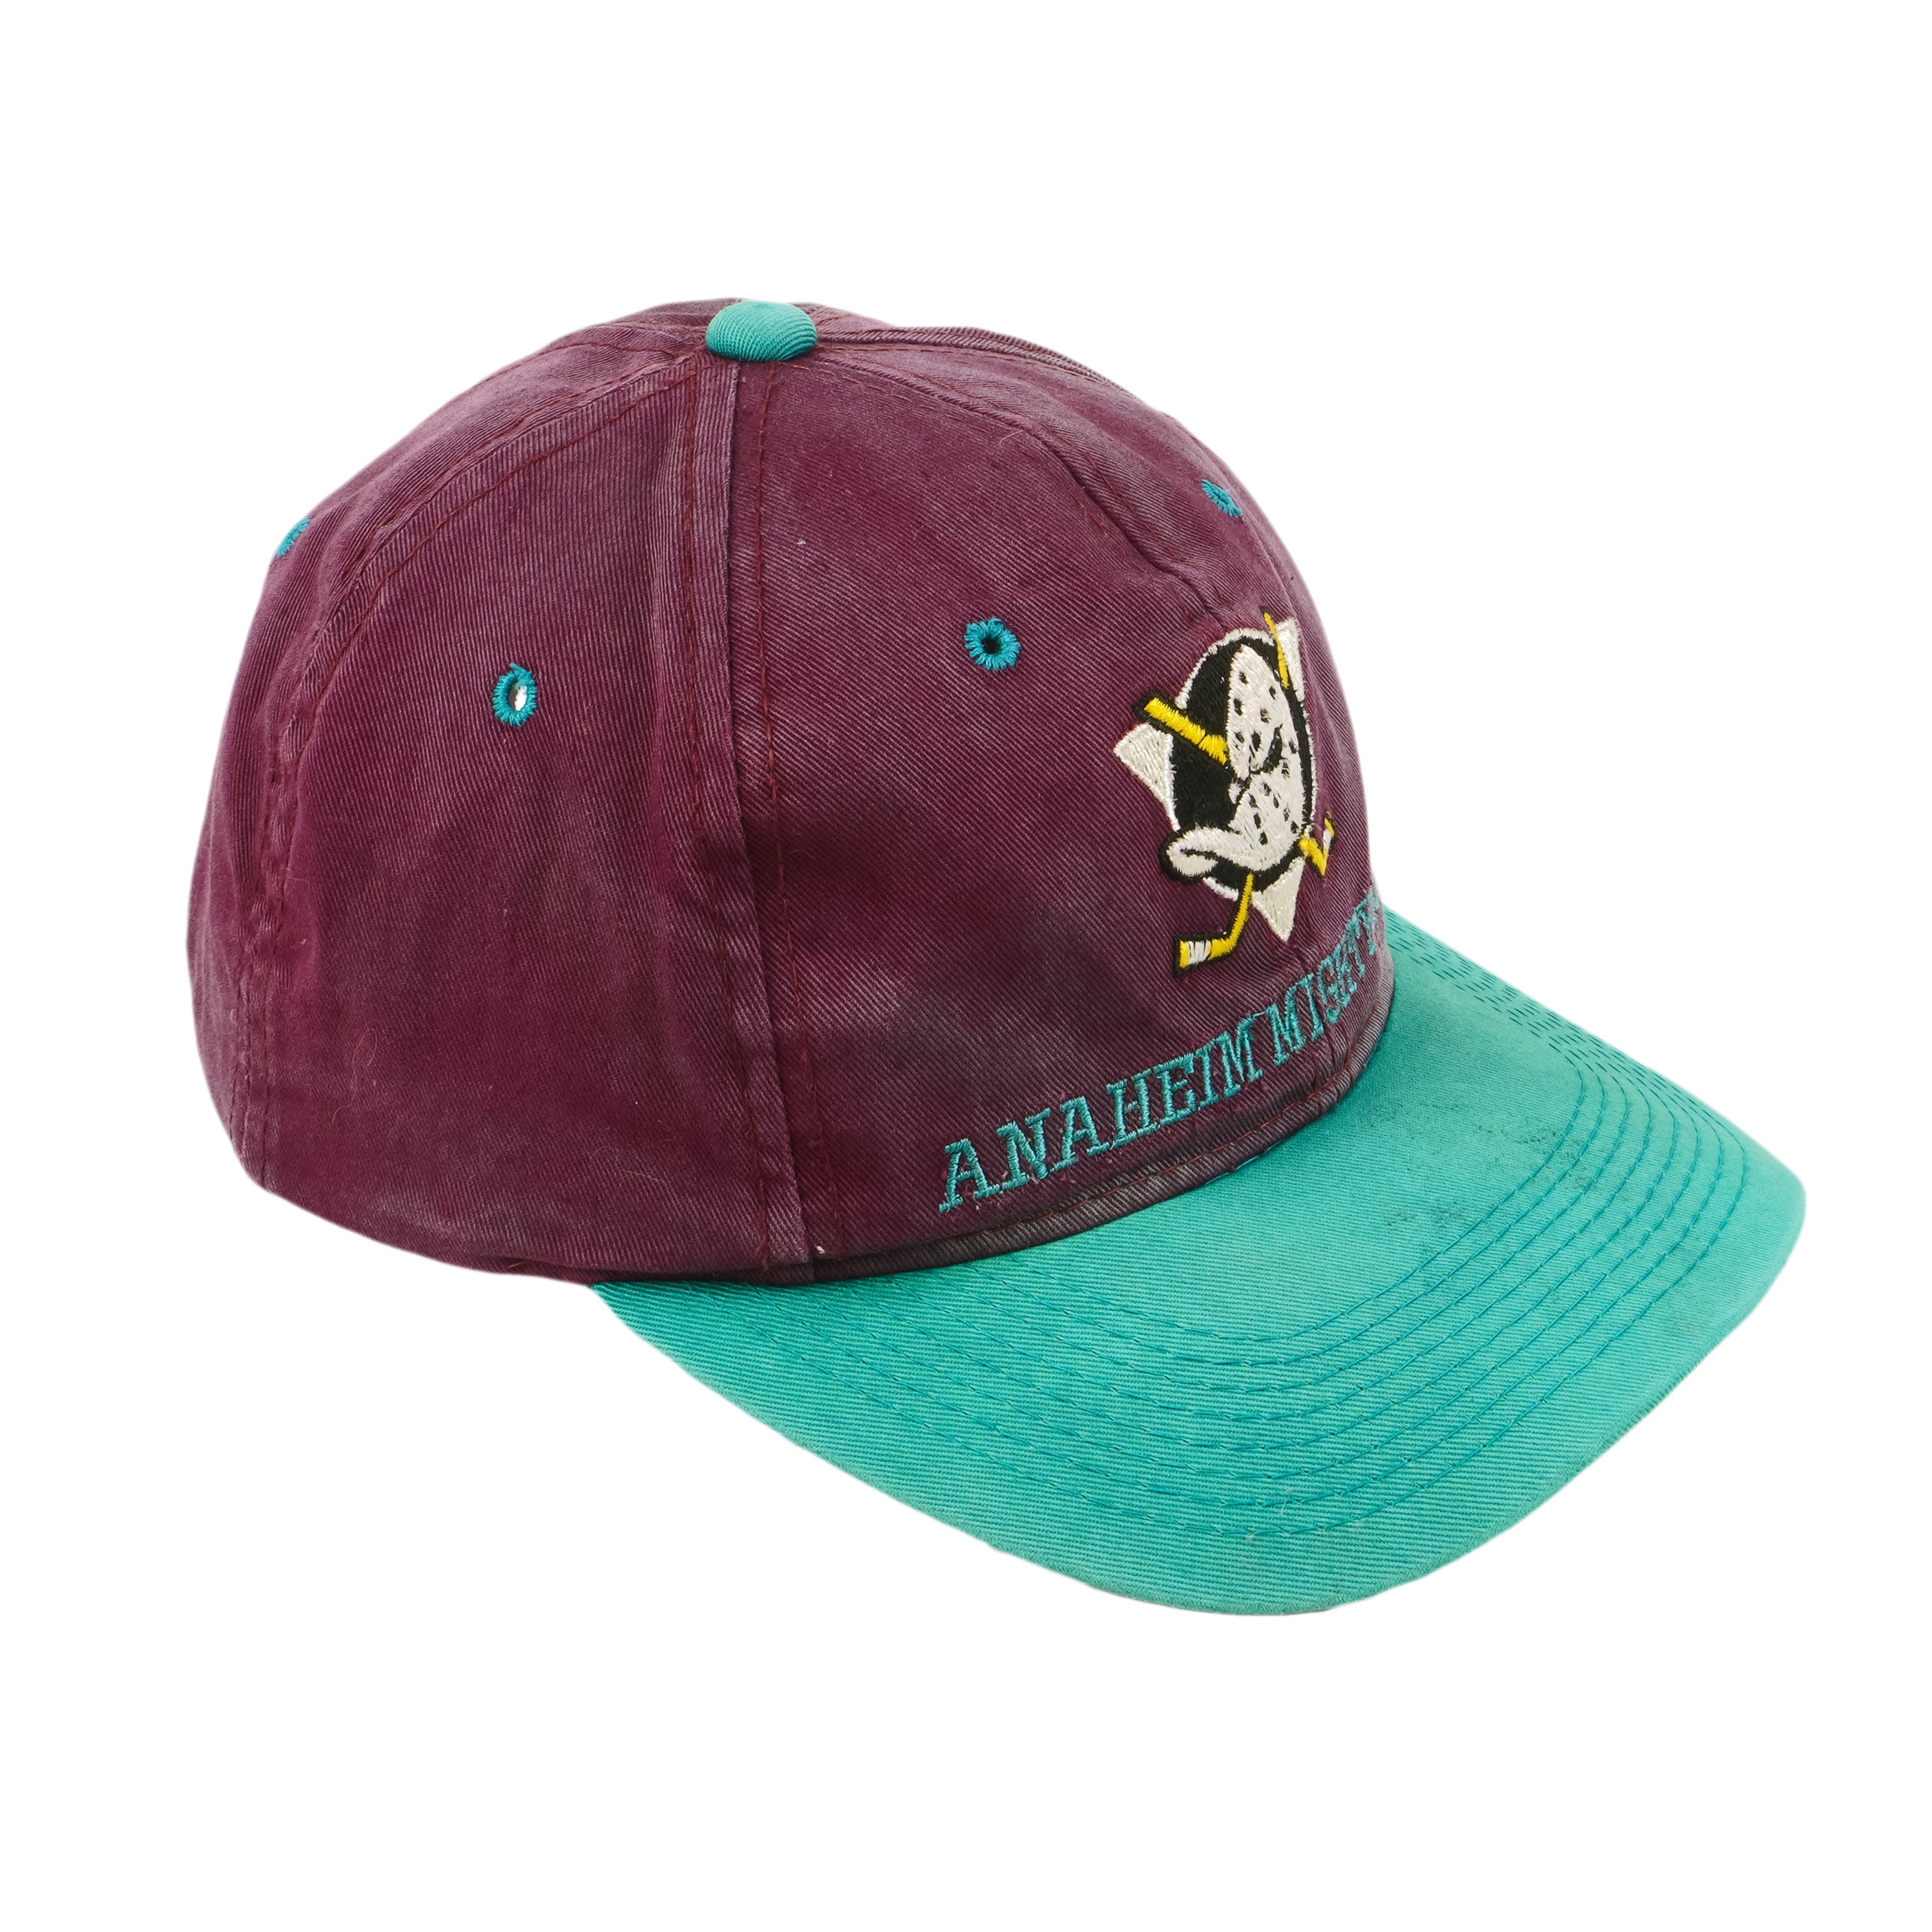 Vintage 90s Anaheim Mighty Ducks Snapback Hat Cap The Game Big